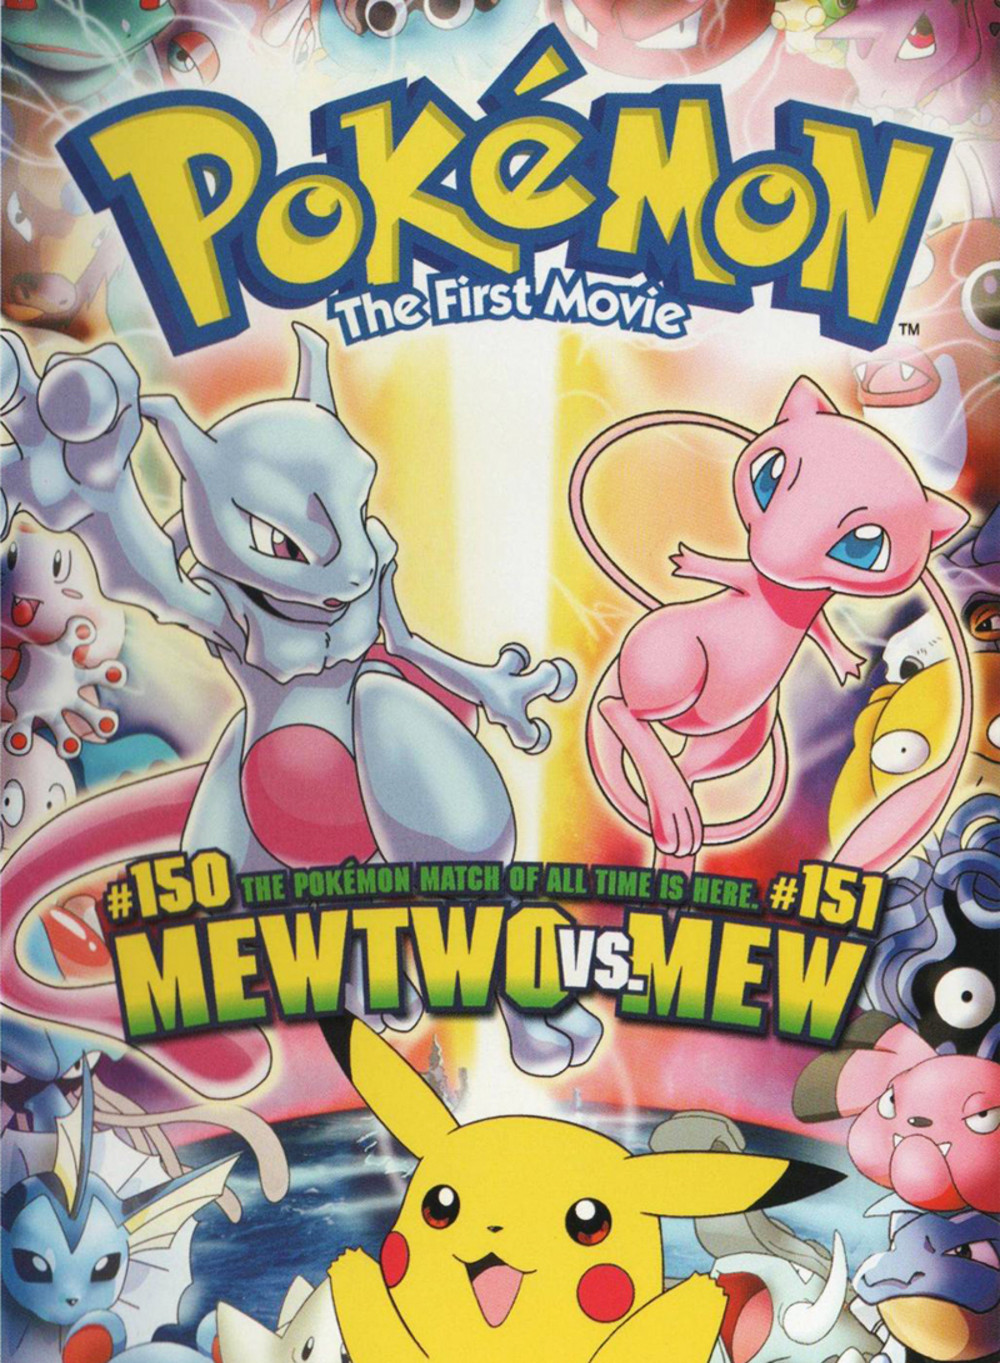 Mew vs Mewtwo Battle in Pokemon Yellow 